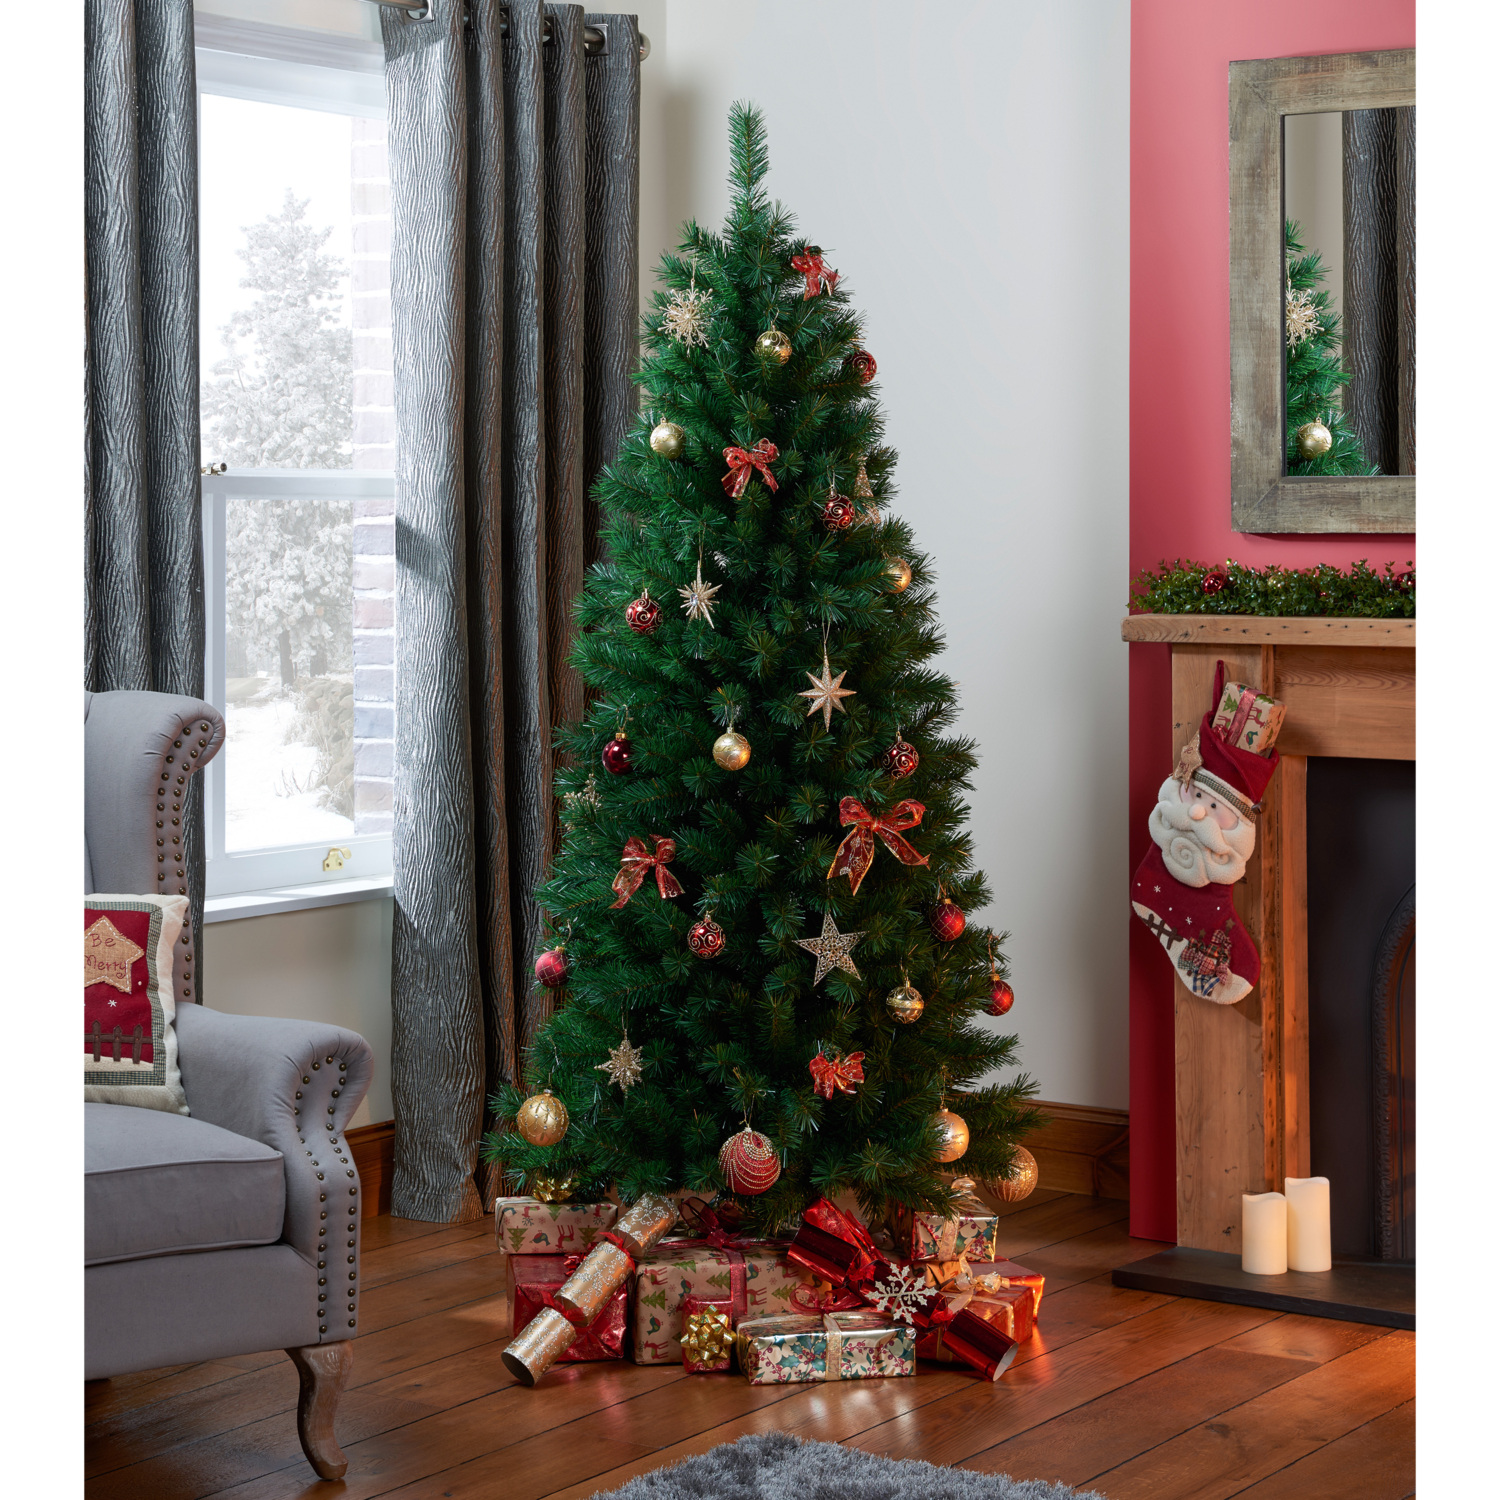 The pine Christmas tree 50+ Top Christmas Tree Decoration Ideas - 6